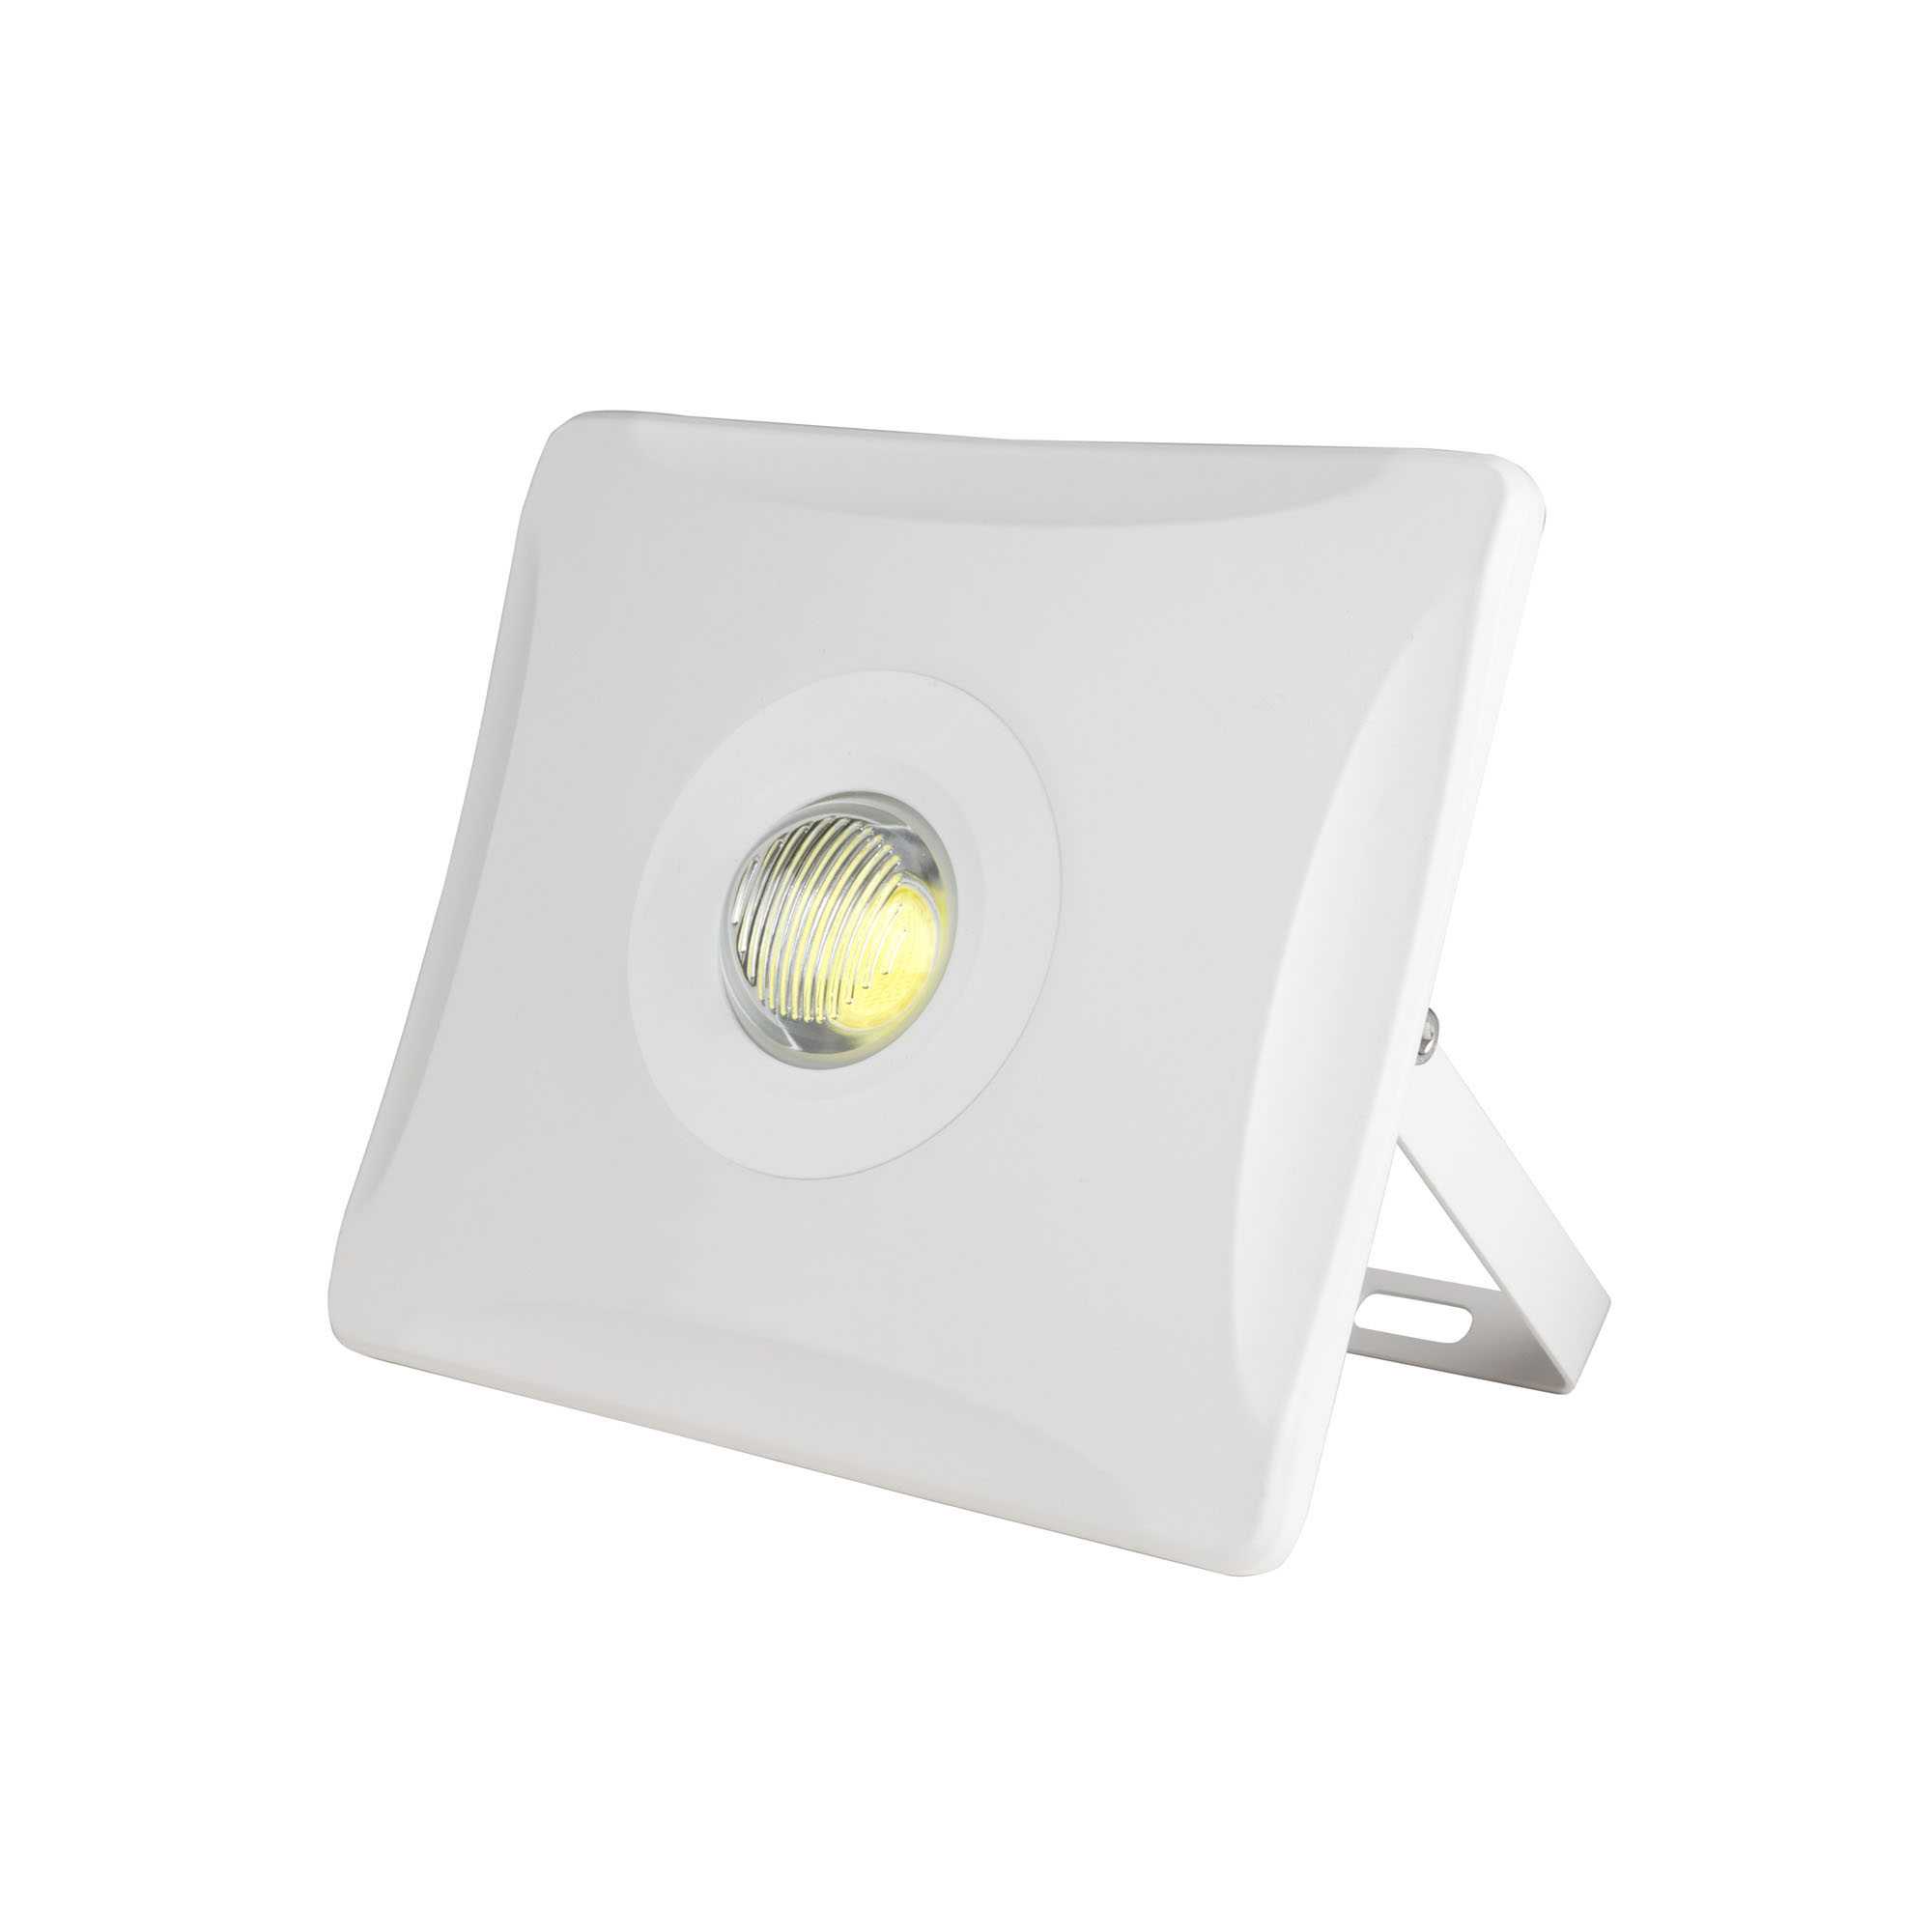 ULF-F11-30W/NW IP65 180-240В WHITE Прожектор светодиодный. Корпус белый. Белый свет. Упаковка картон